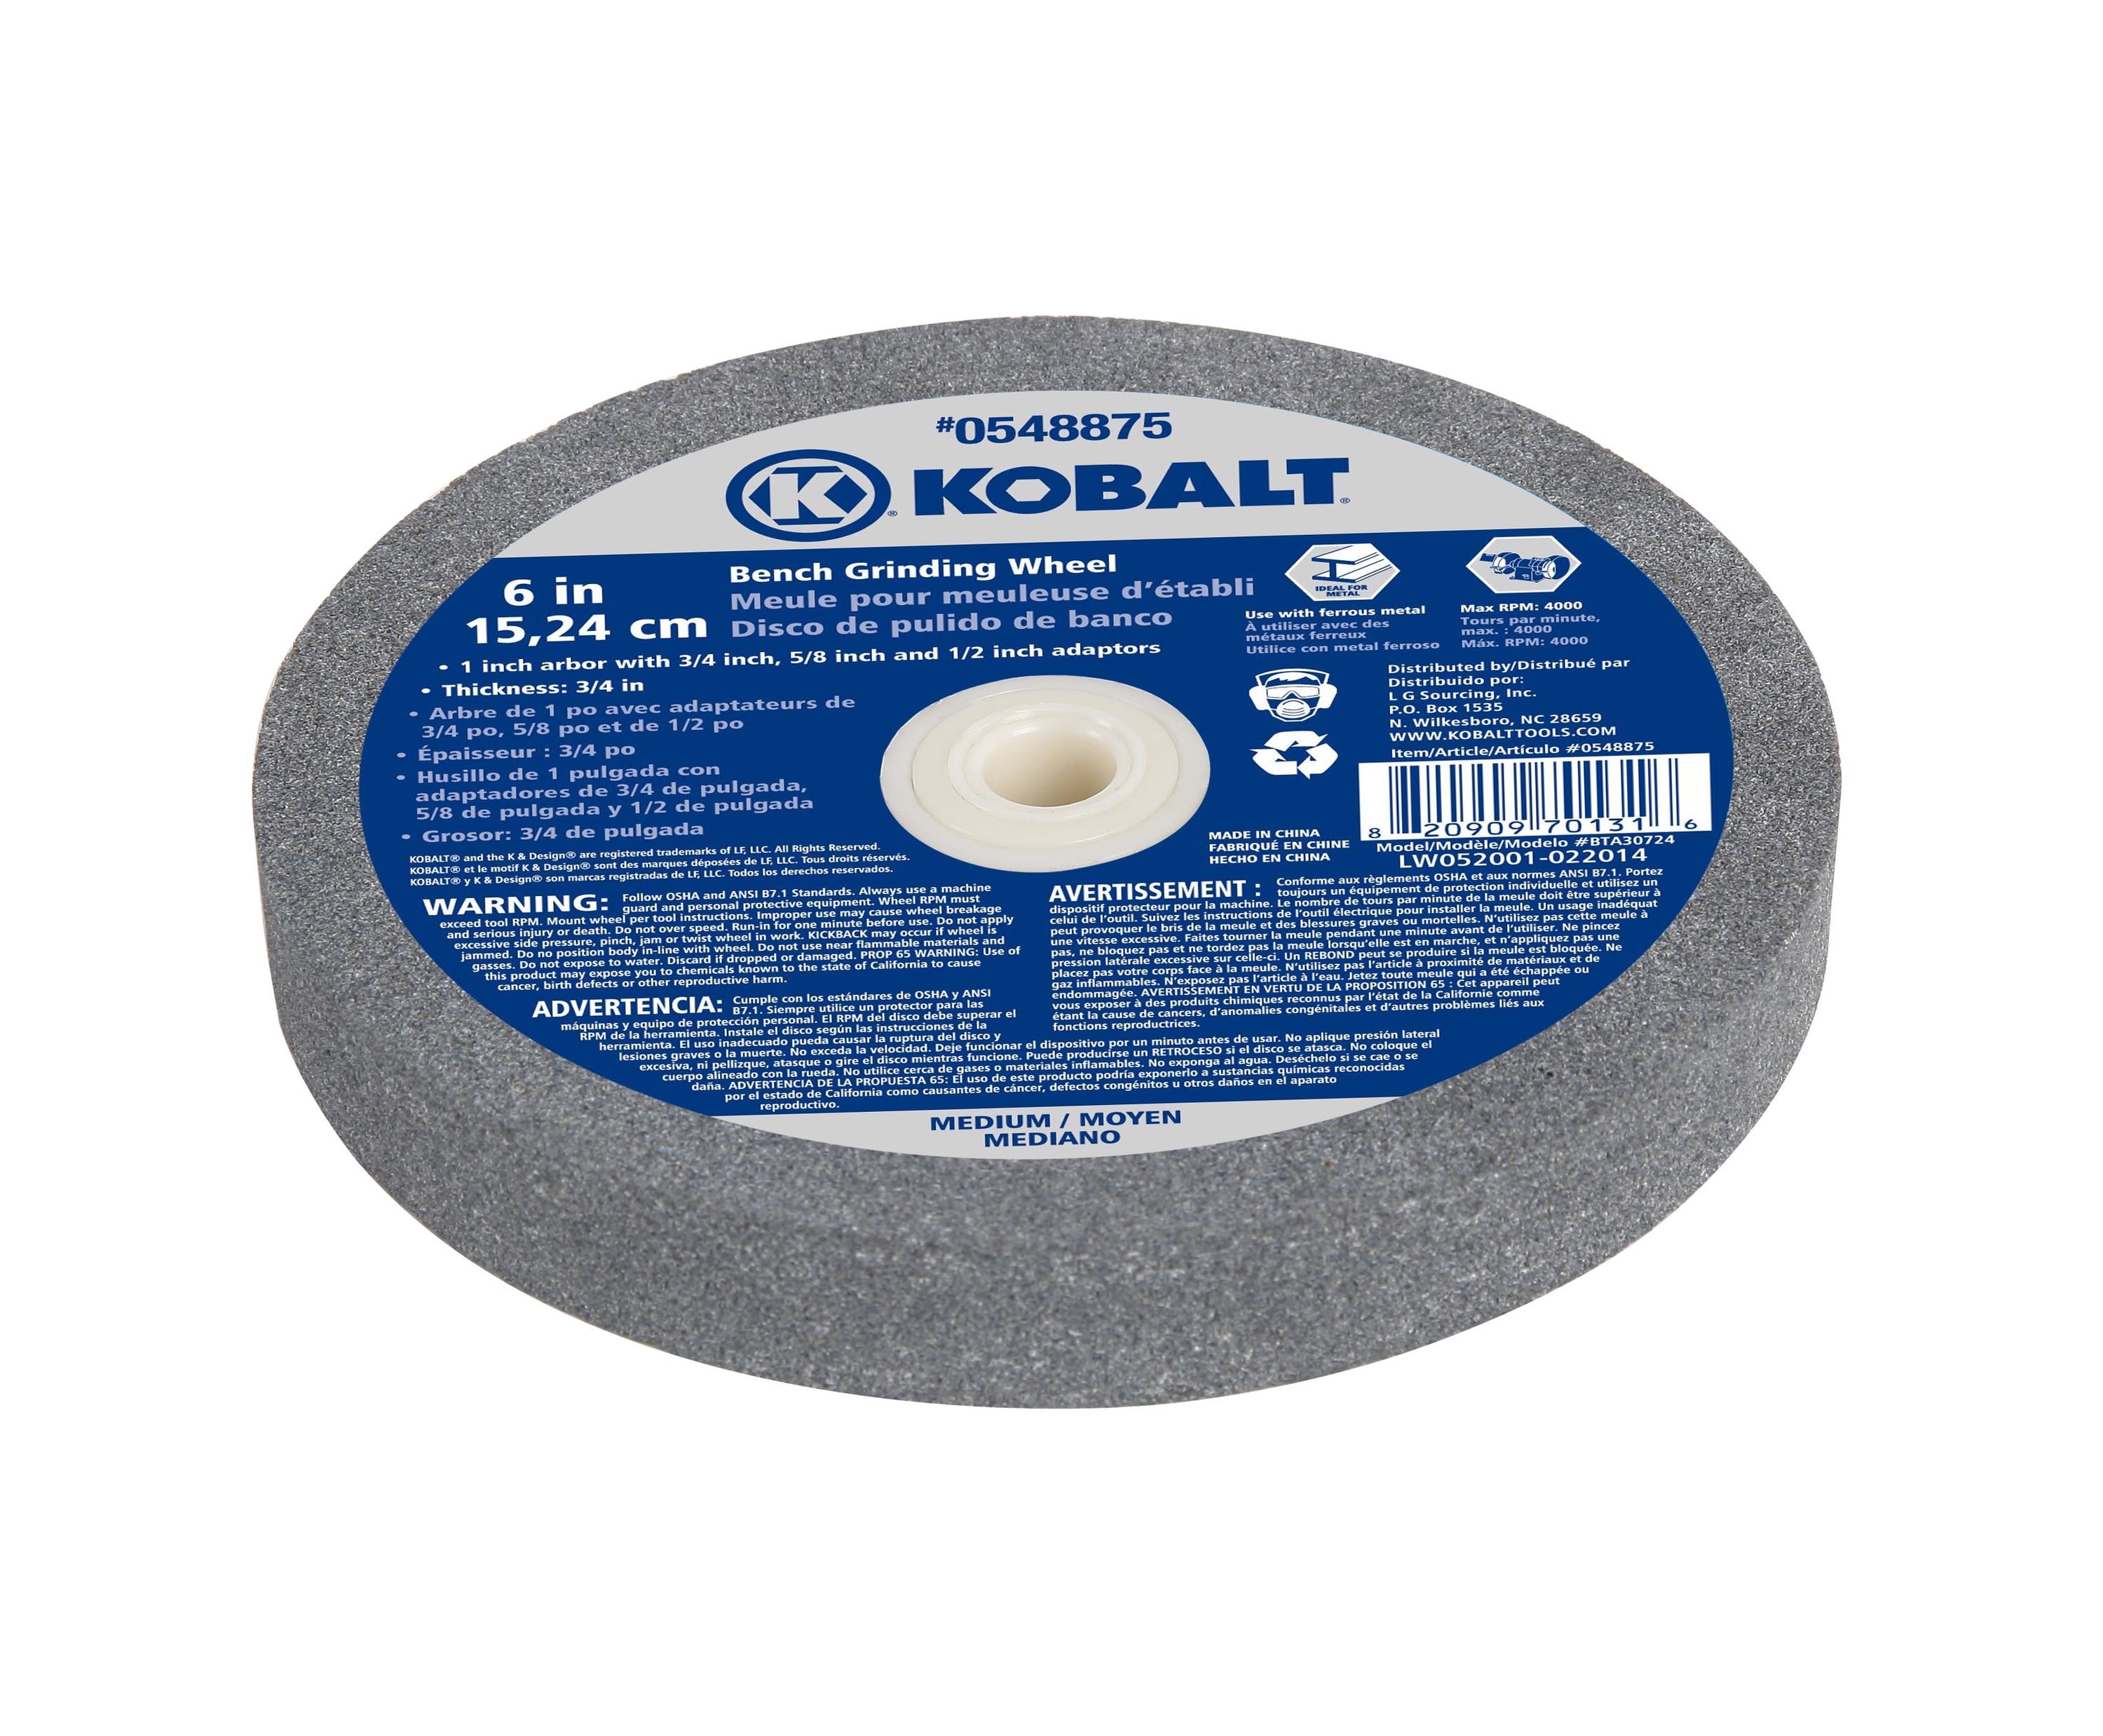 Kobalt 6-in Medium Buffing/Polishing (2-Pack) in the Wire Wheels